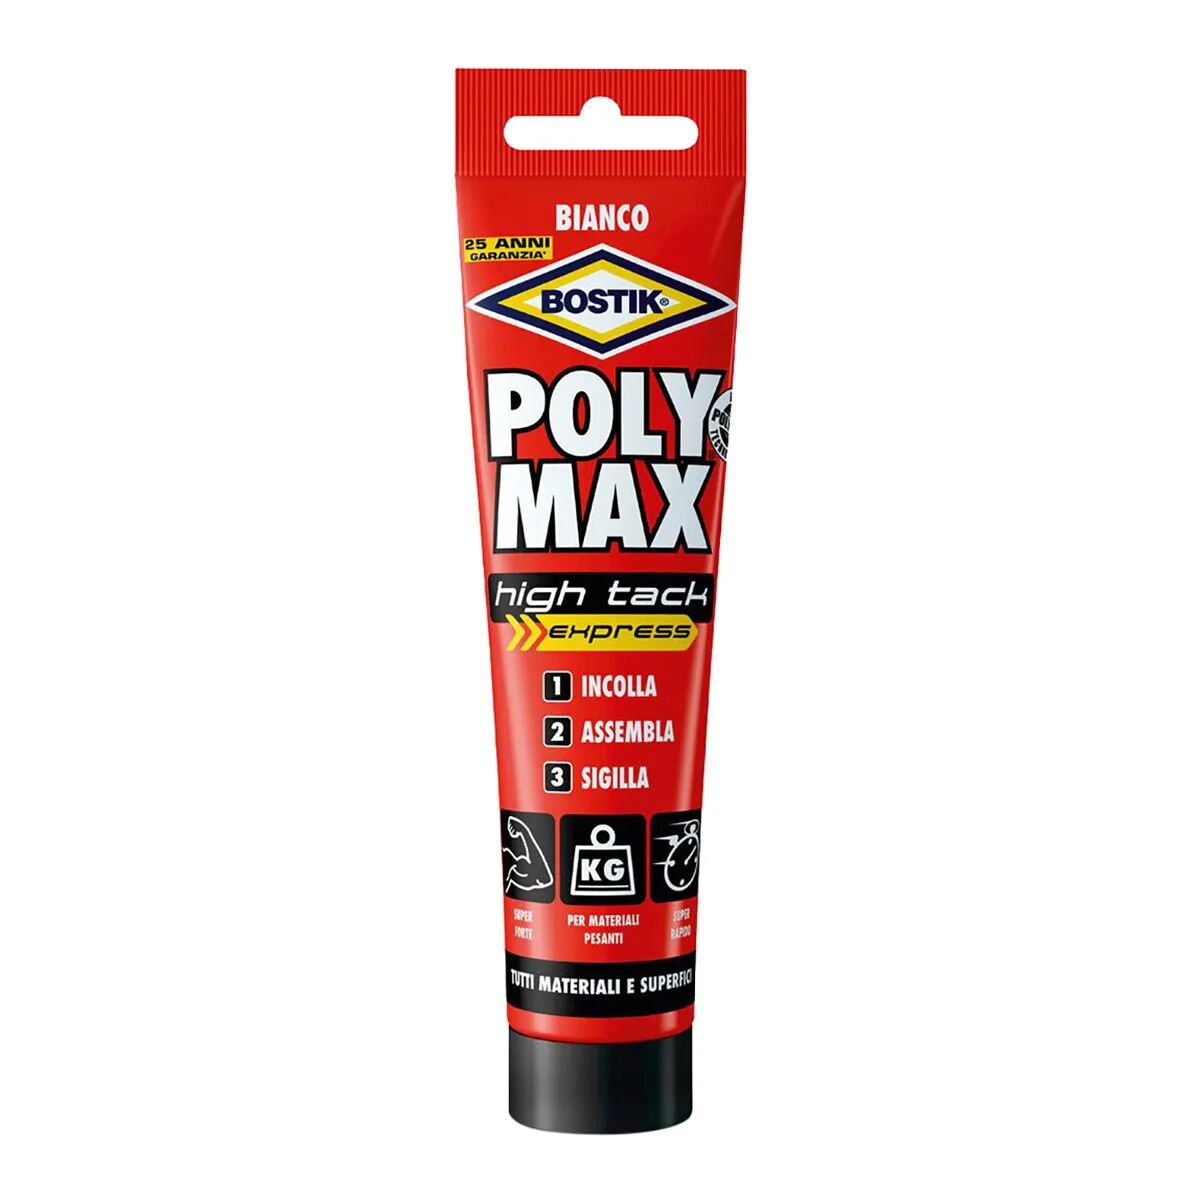 POLYMAX Adesivo Poymax High Tack Bostik 165 G Express Bianco Incolla In Verticale E In Sospeso